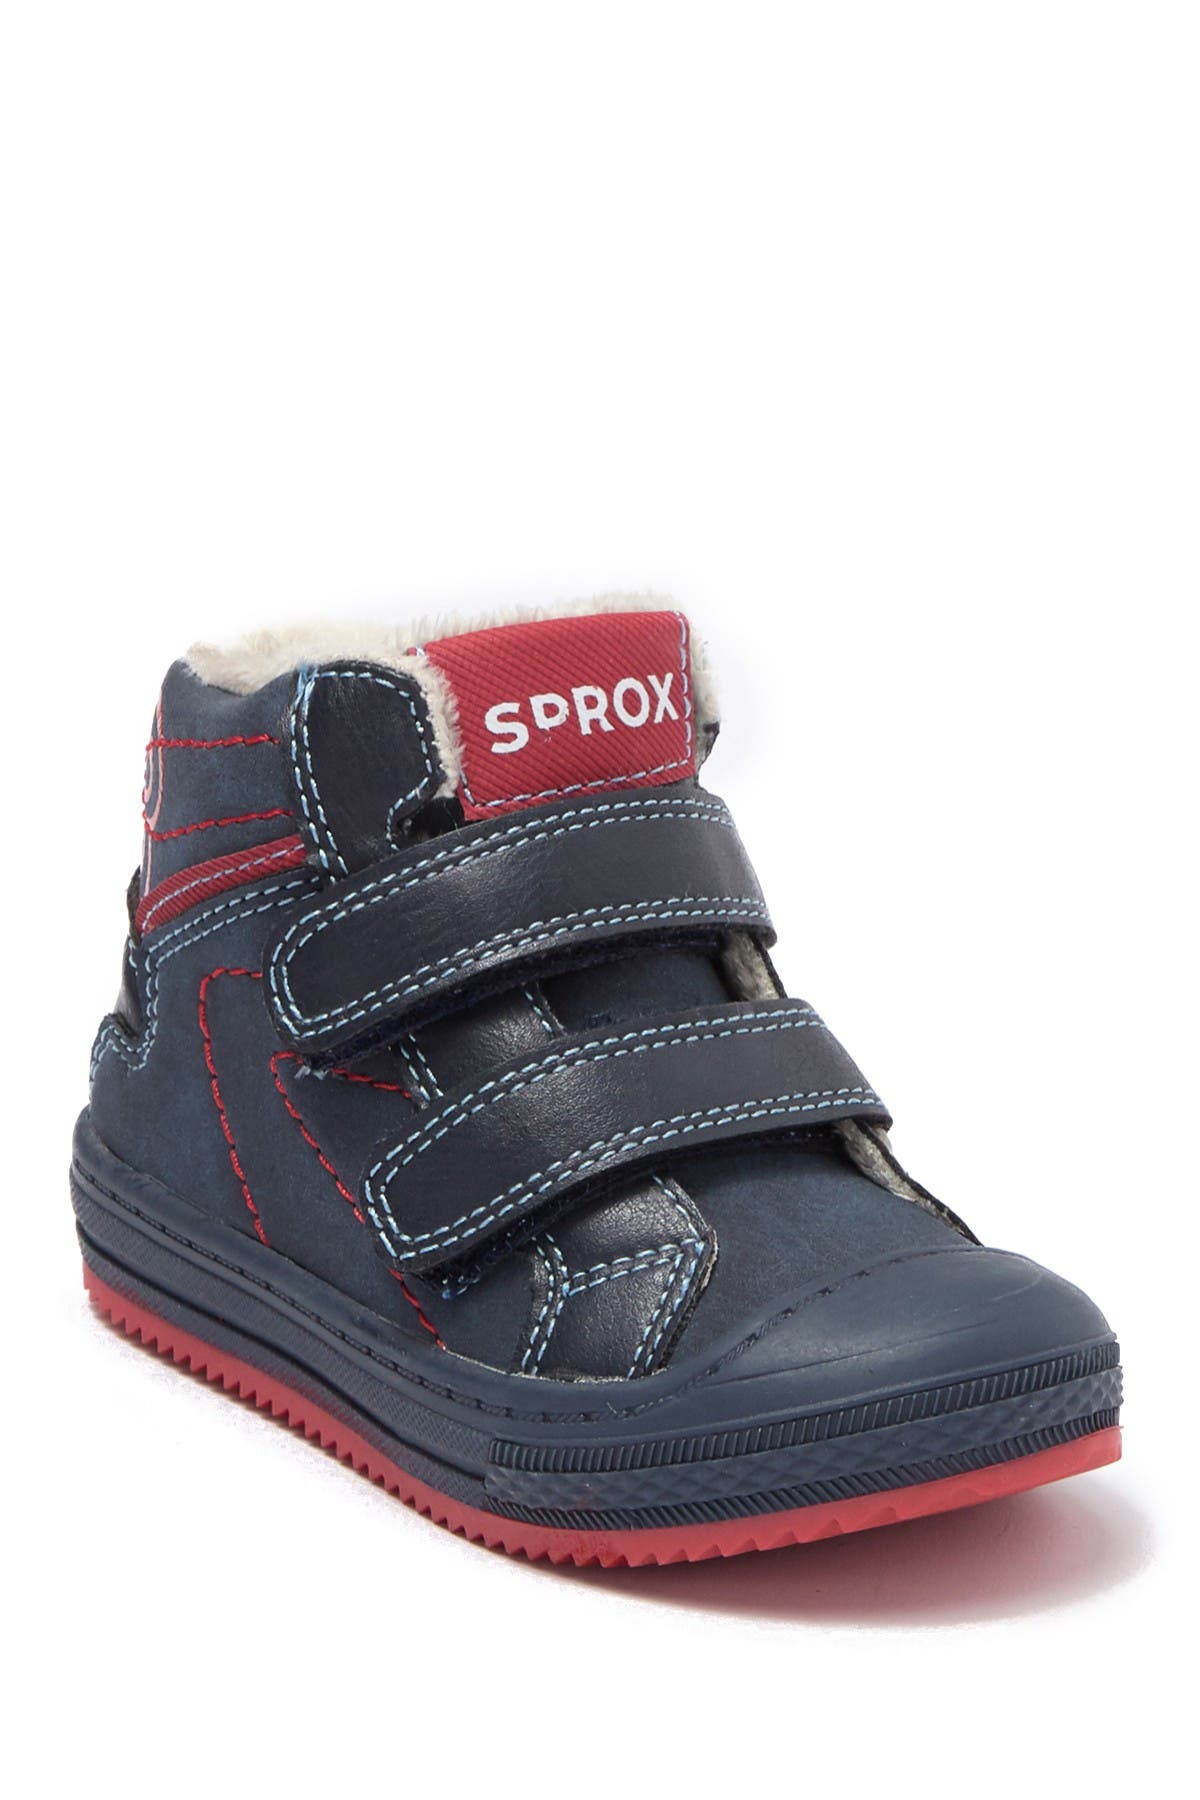 SPROX Kids' Boys' Shoes | Nordstrom Rack